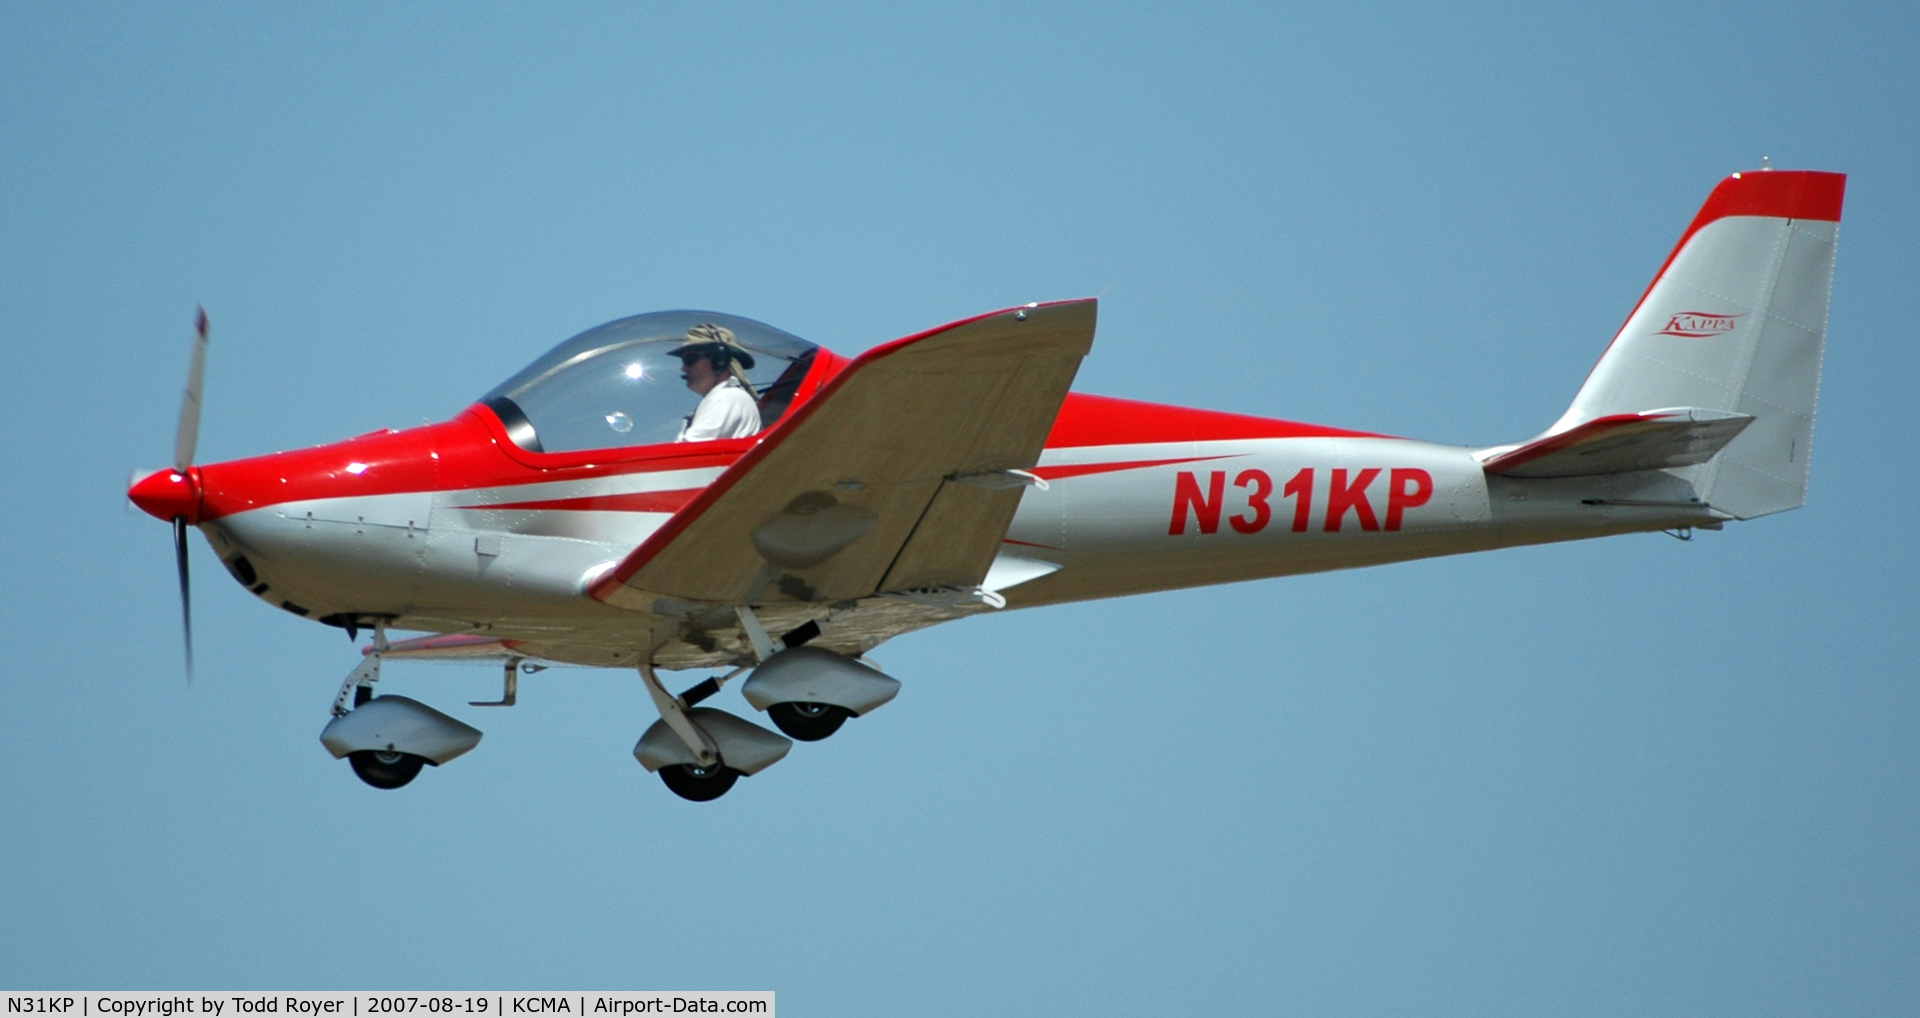 N31KP, 2006 Jihlavan KP-5 ASA C/N 5126143 L, Camarillo airshow 2007